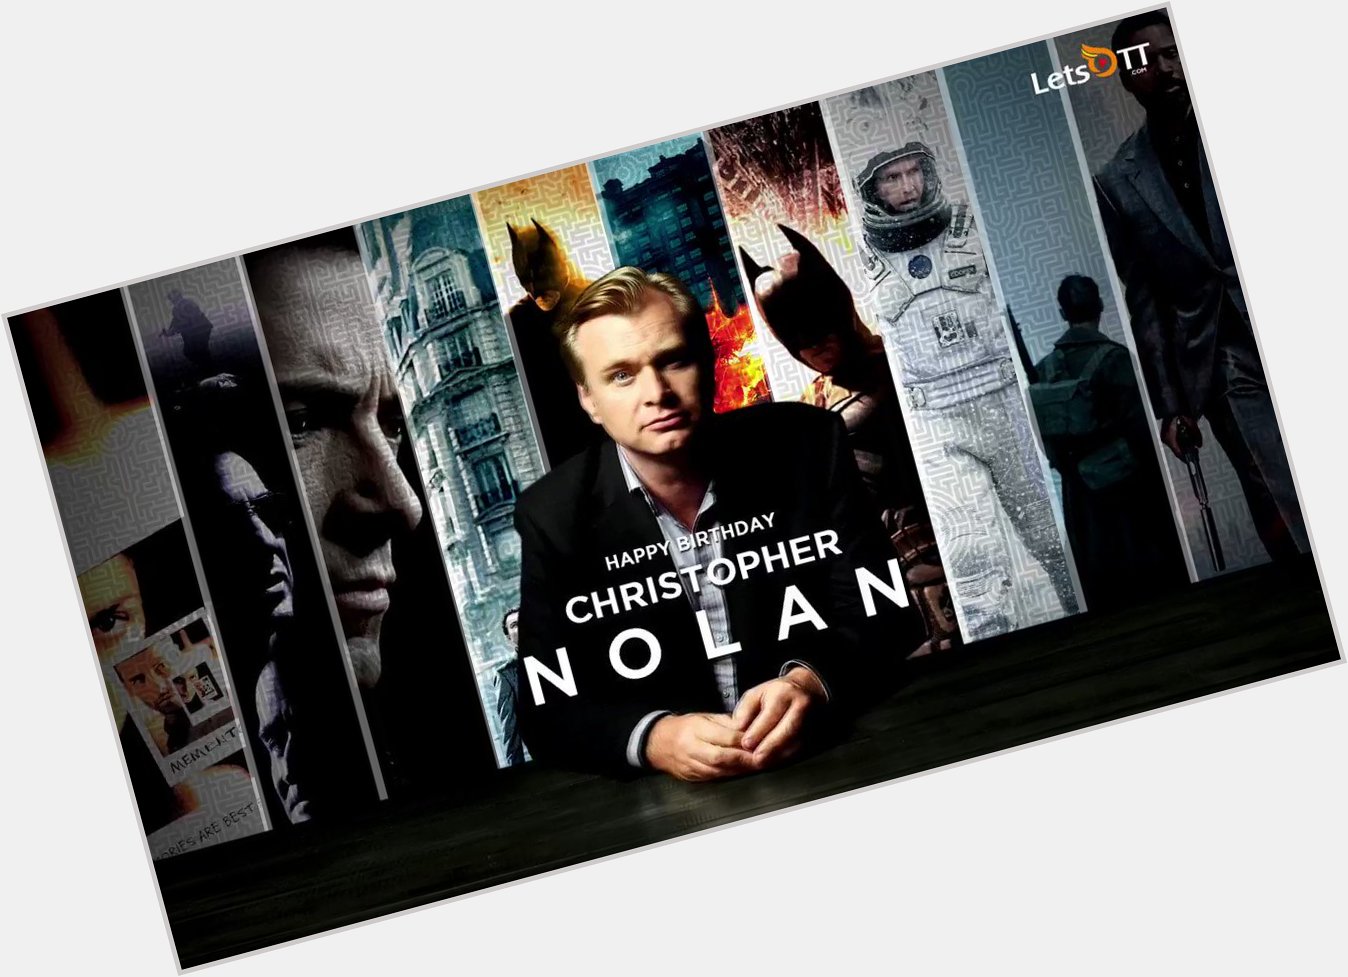 The WORLD OF NOLAN G.O.A.T

Happy Birthday Christopher Nolan. 